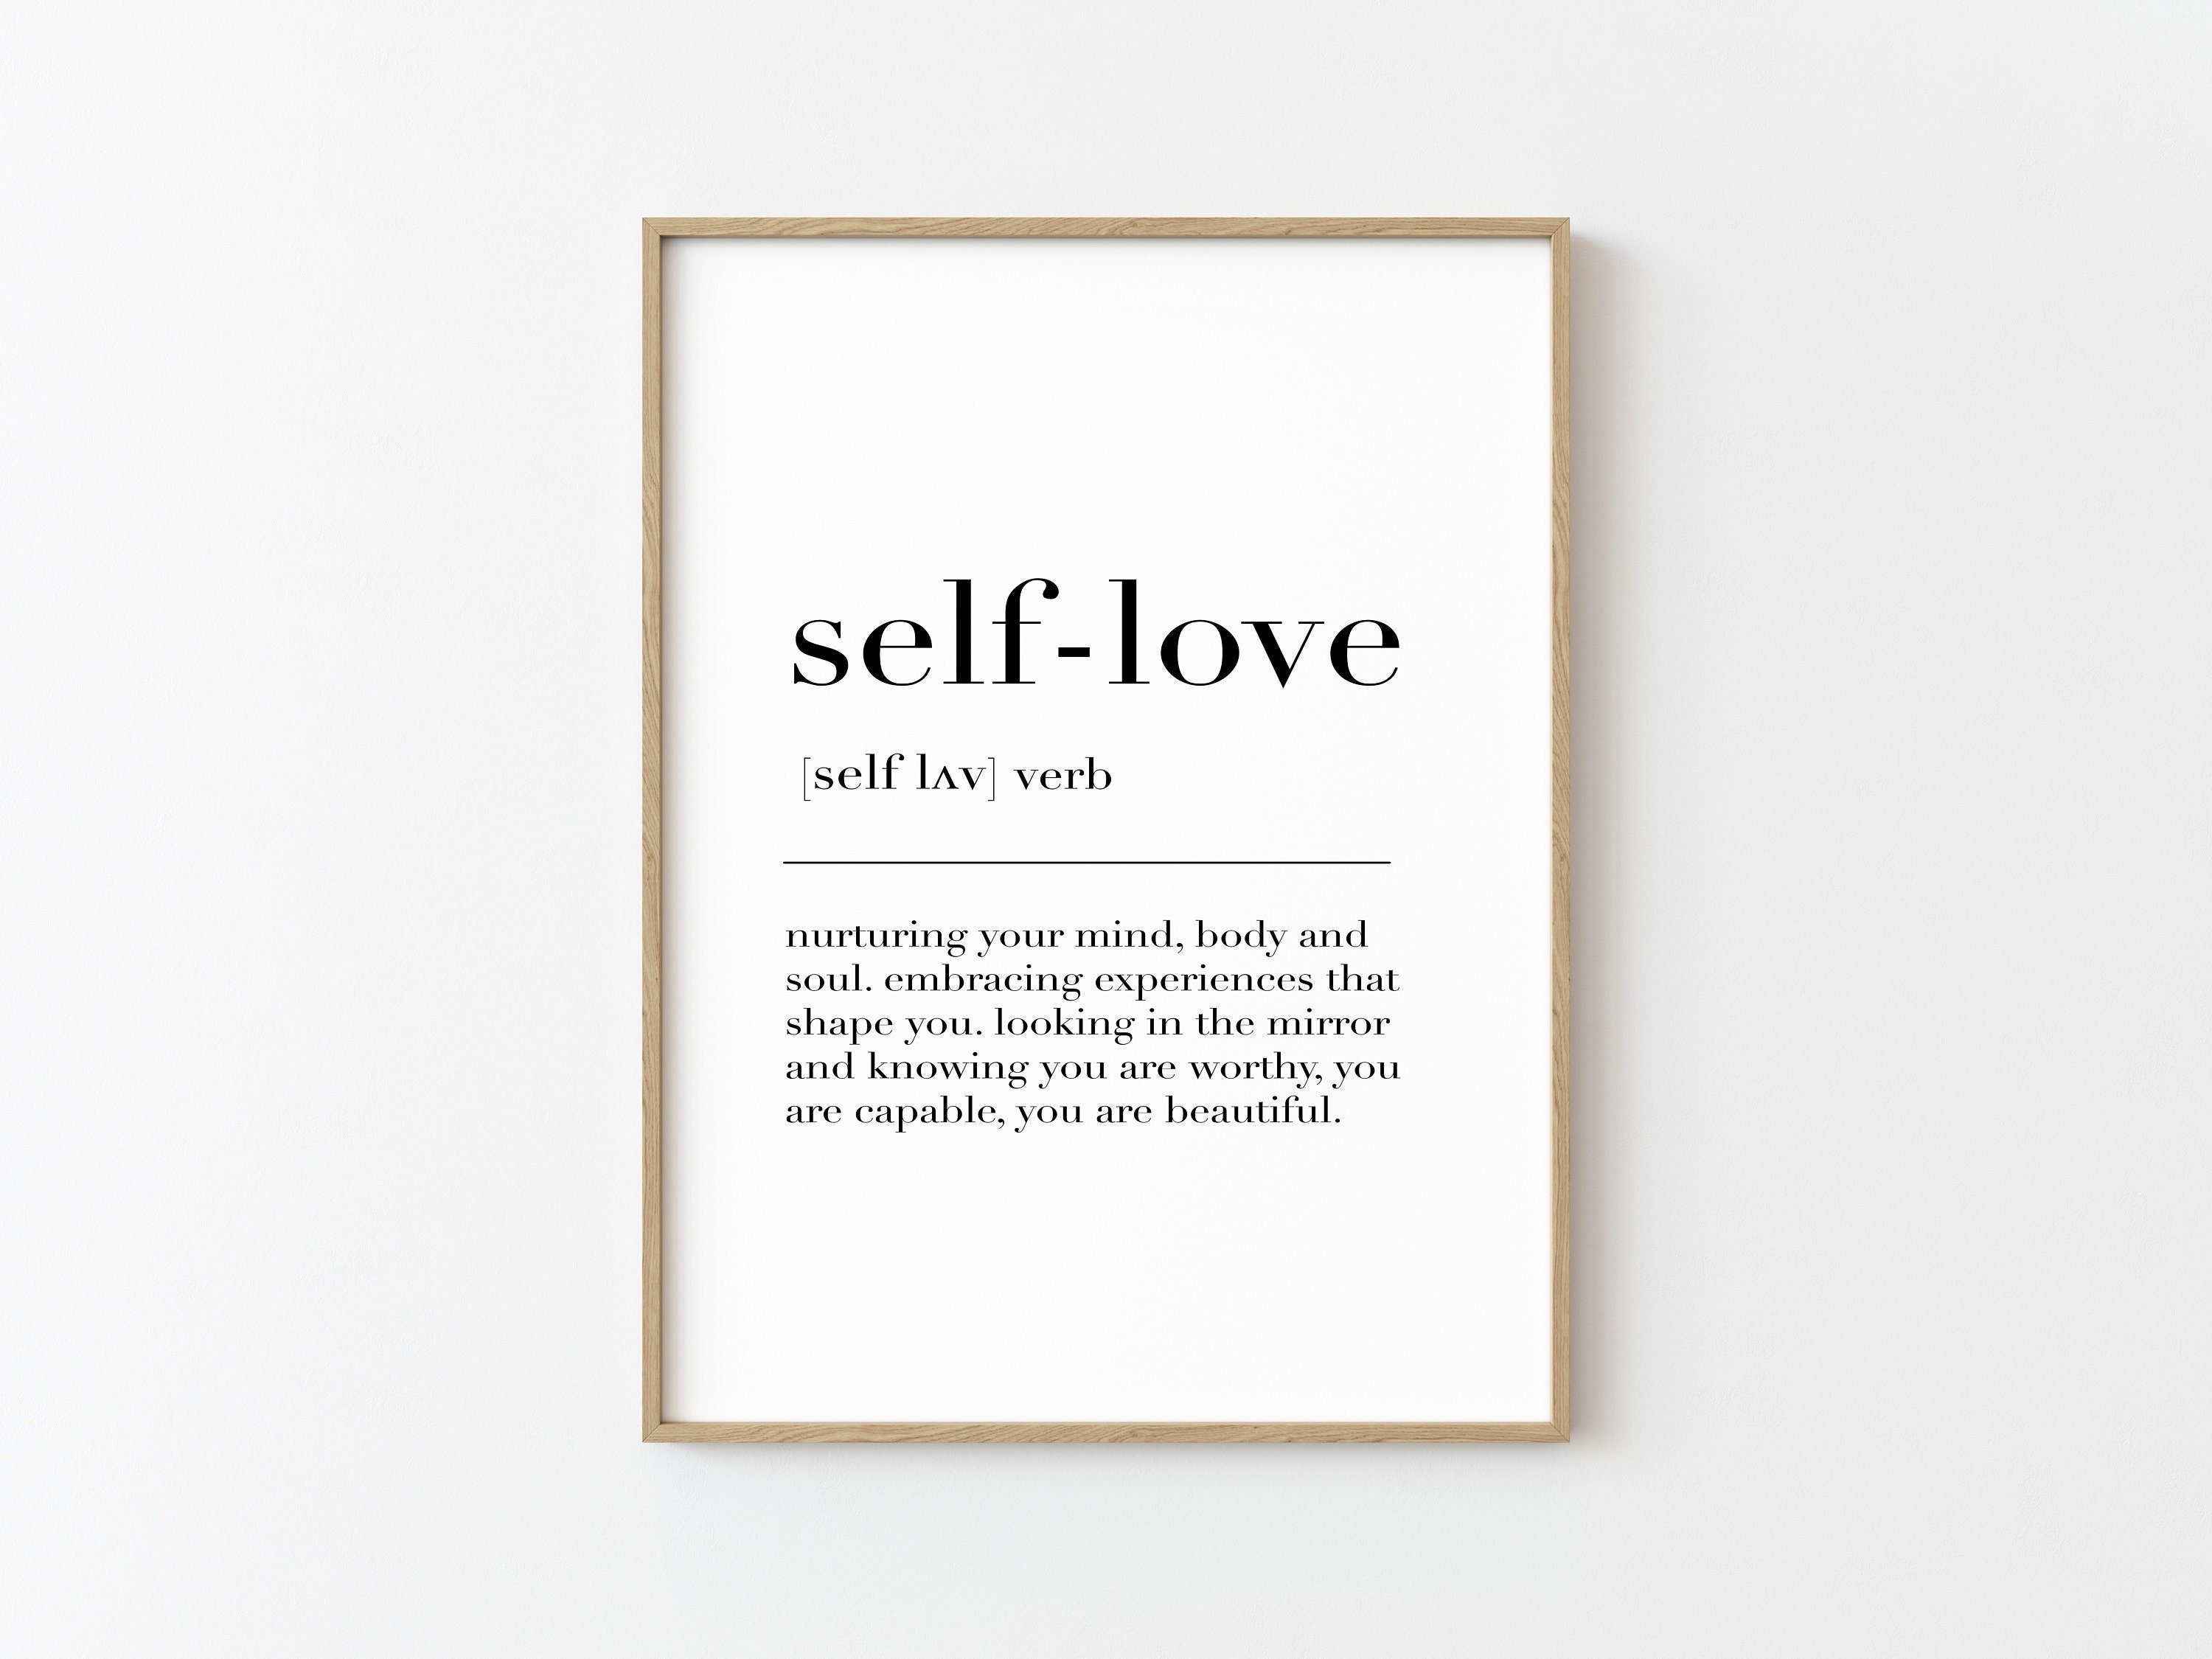 self love definition essay